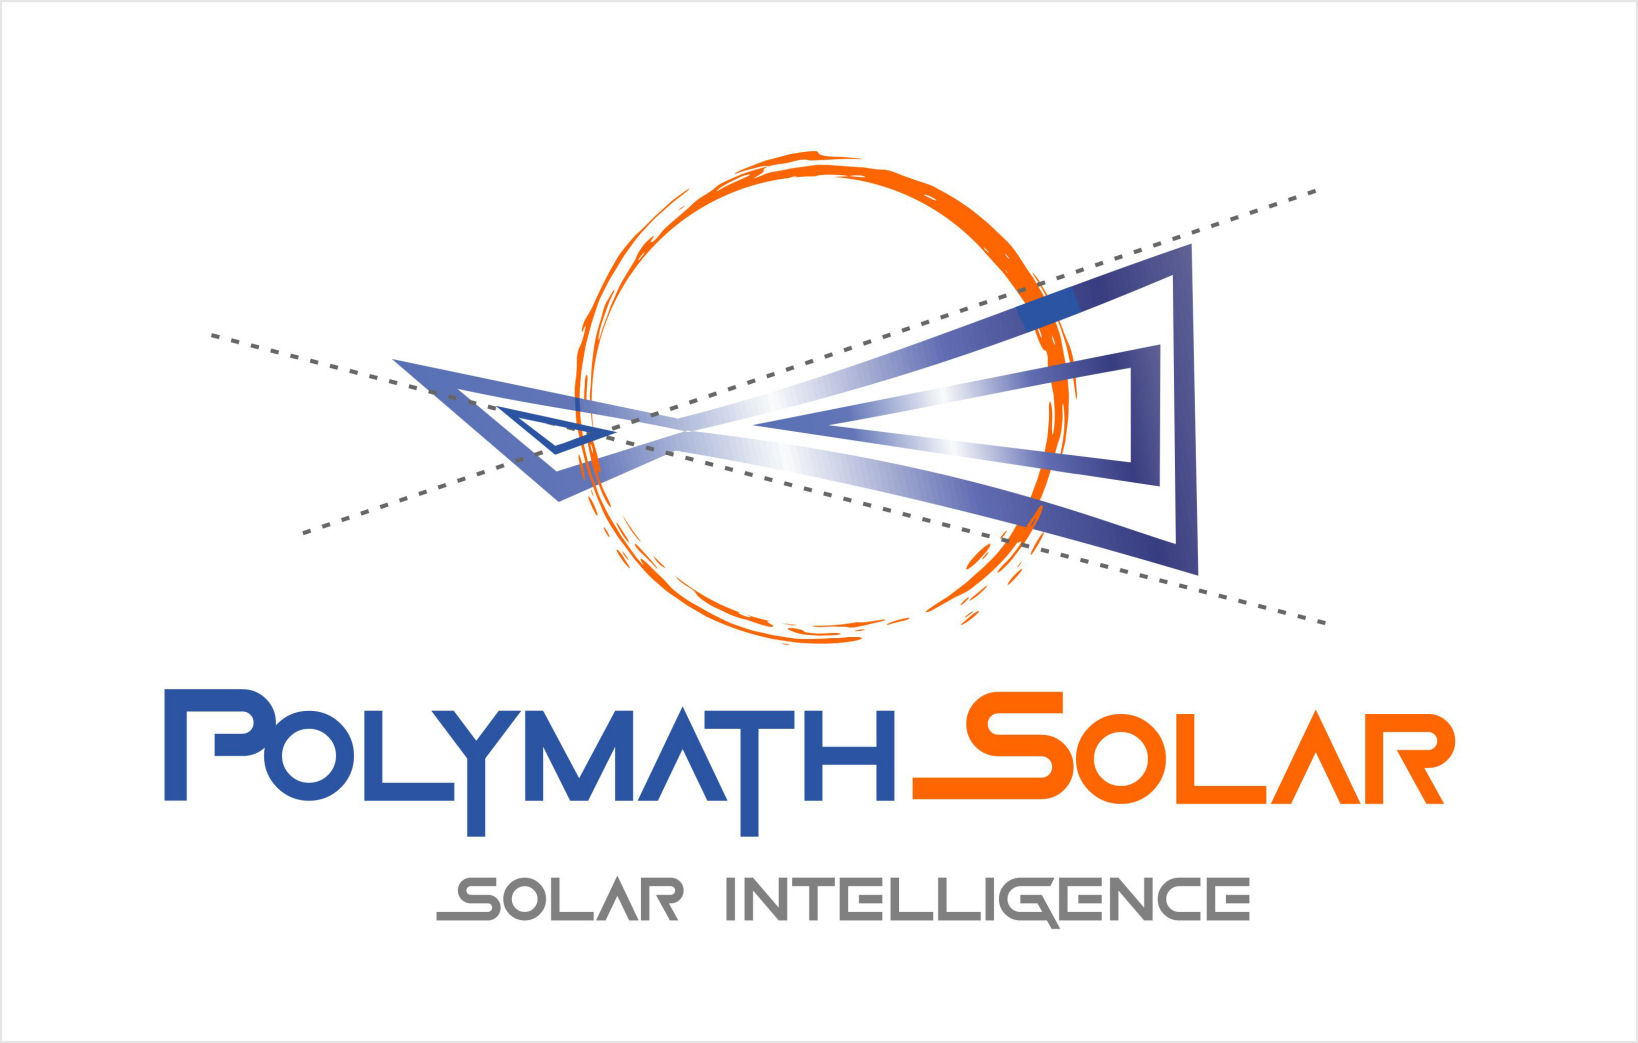 Polymath Solar (Pty) Ltd